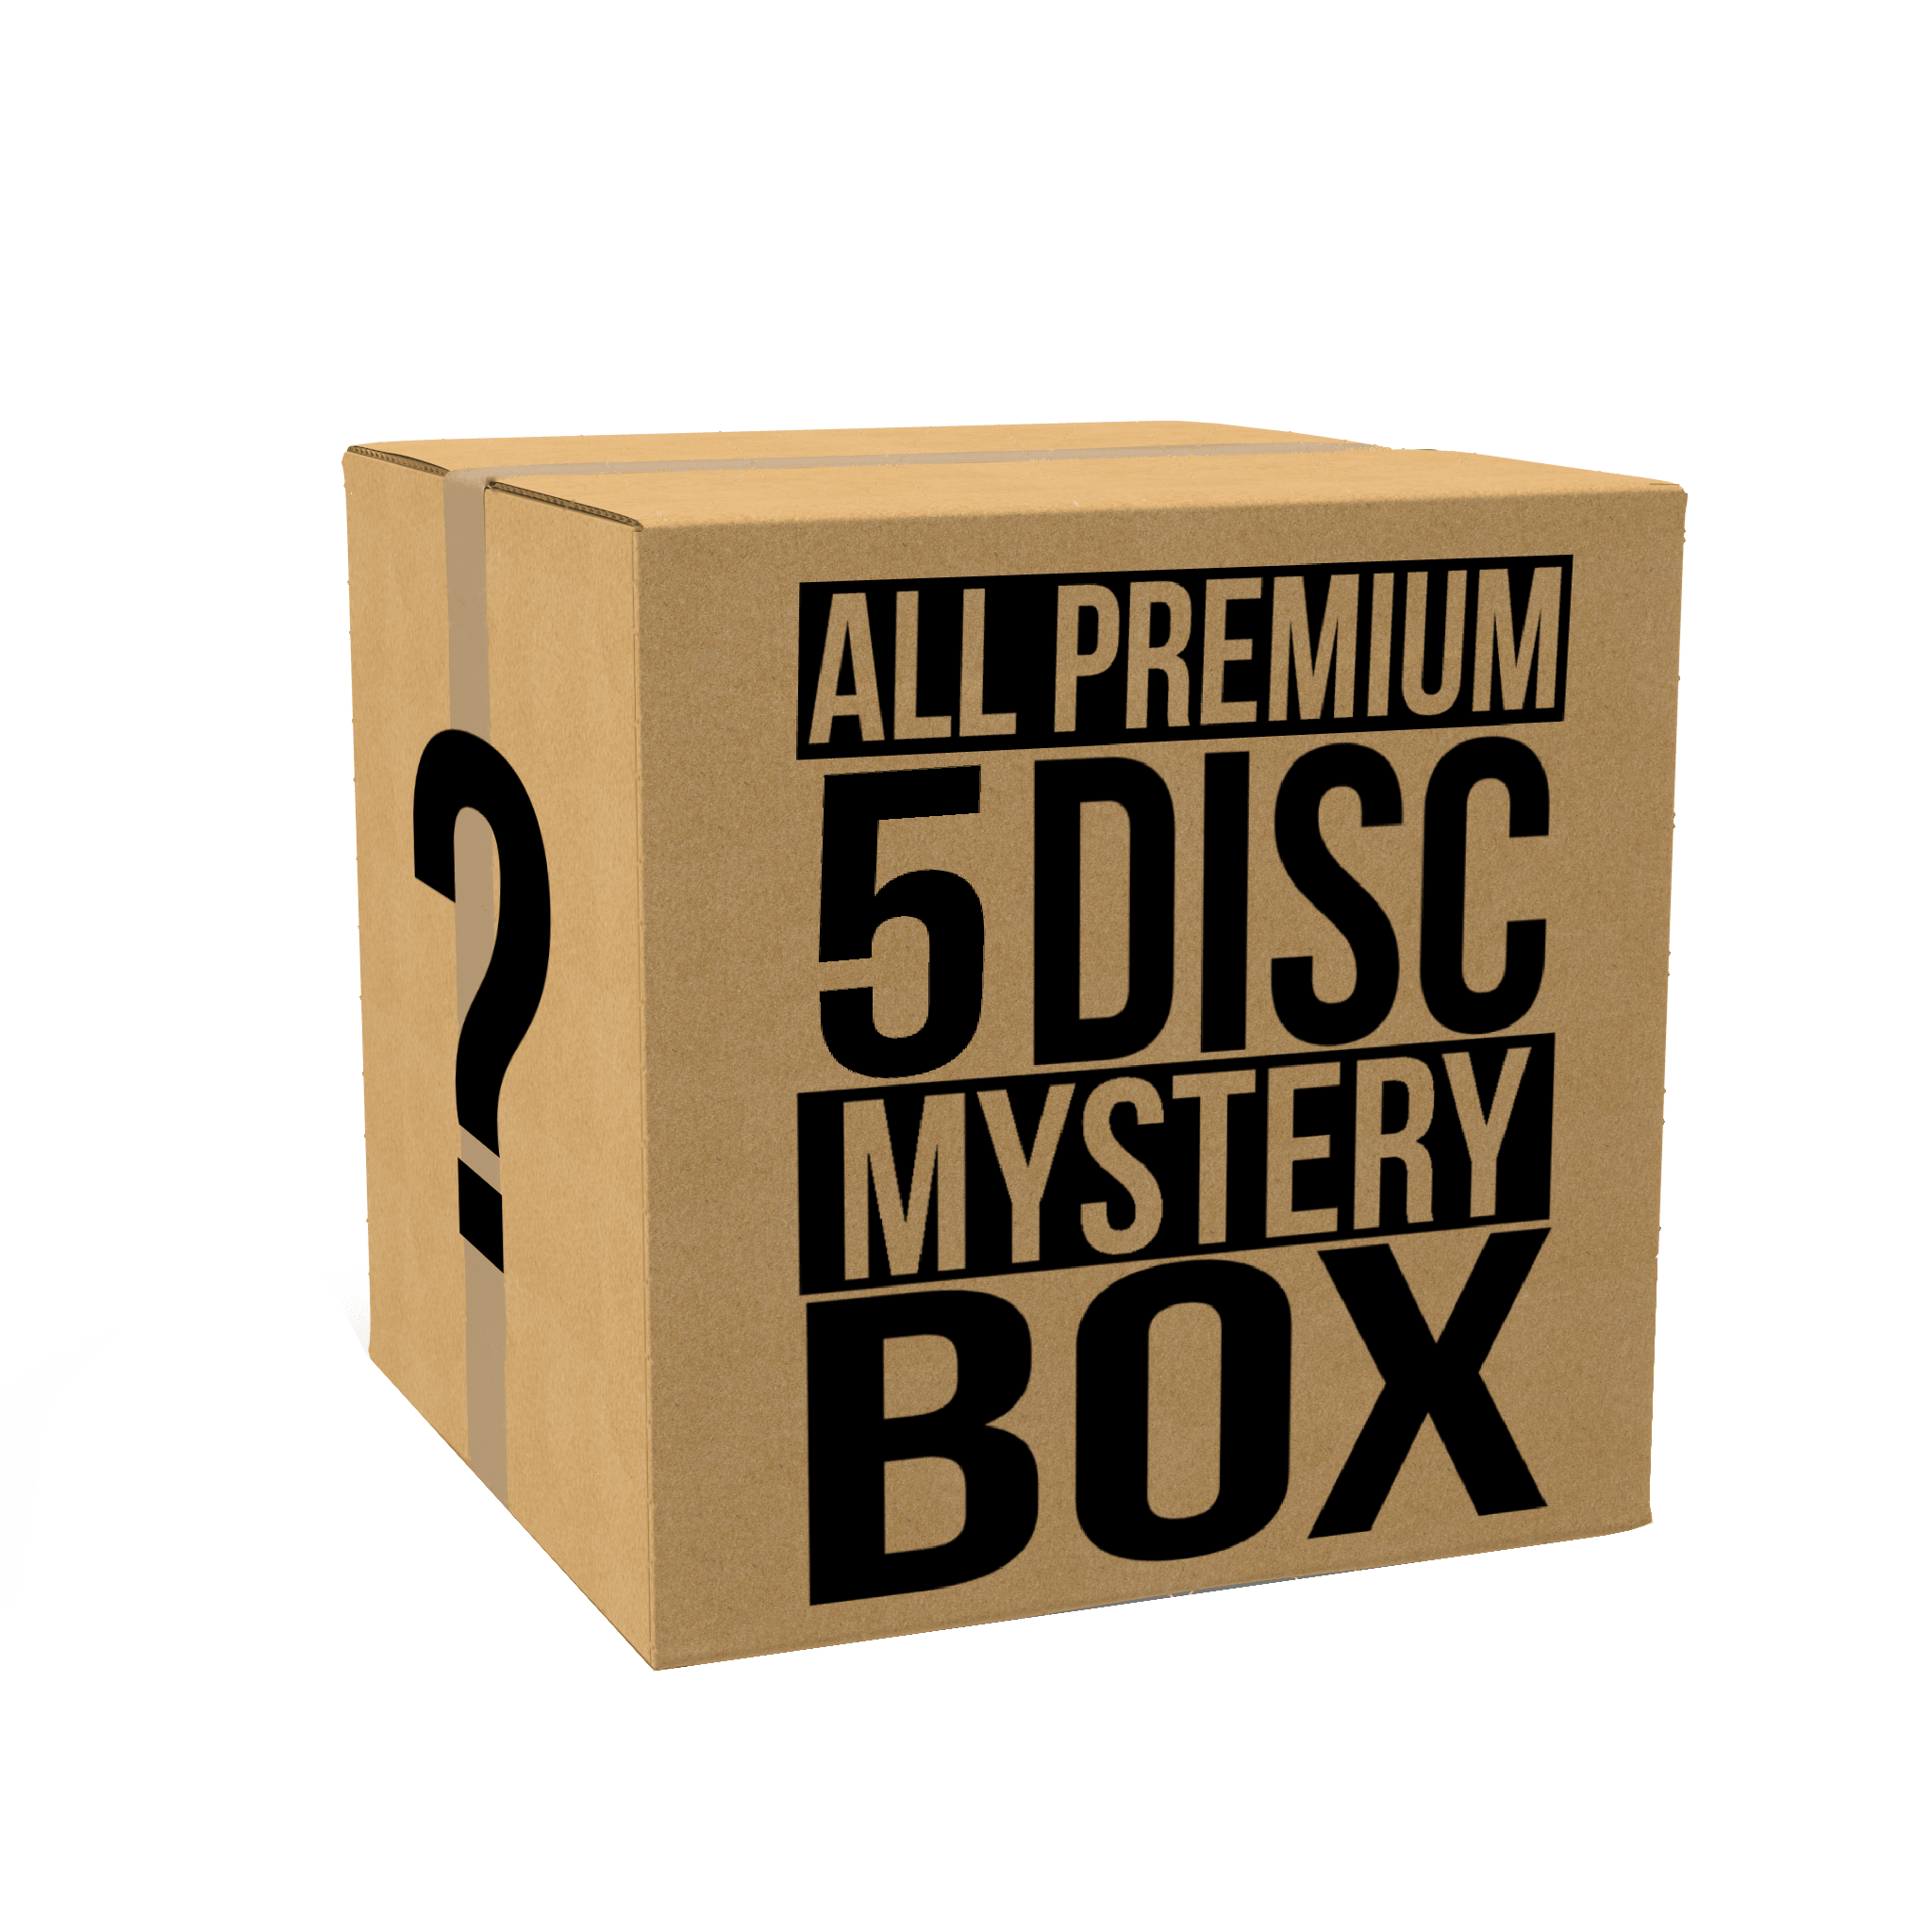 Shop Prodigy Disc Golf Mystery Boxes & Sets